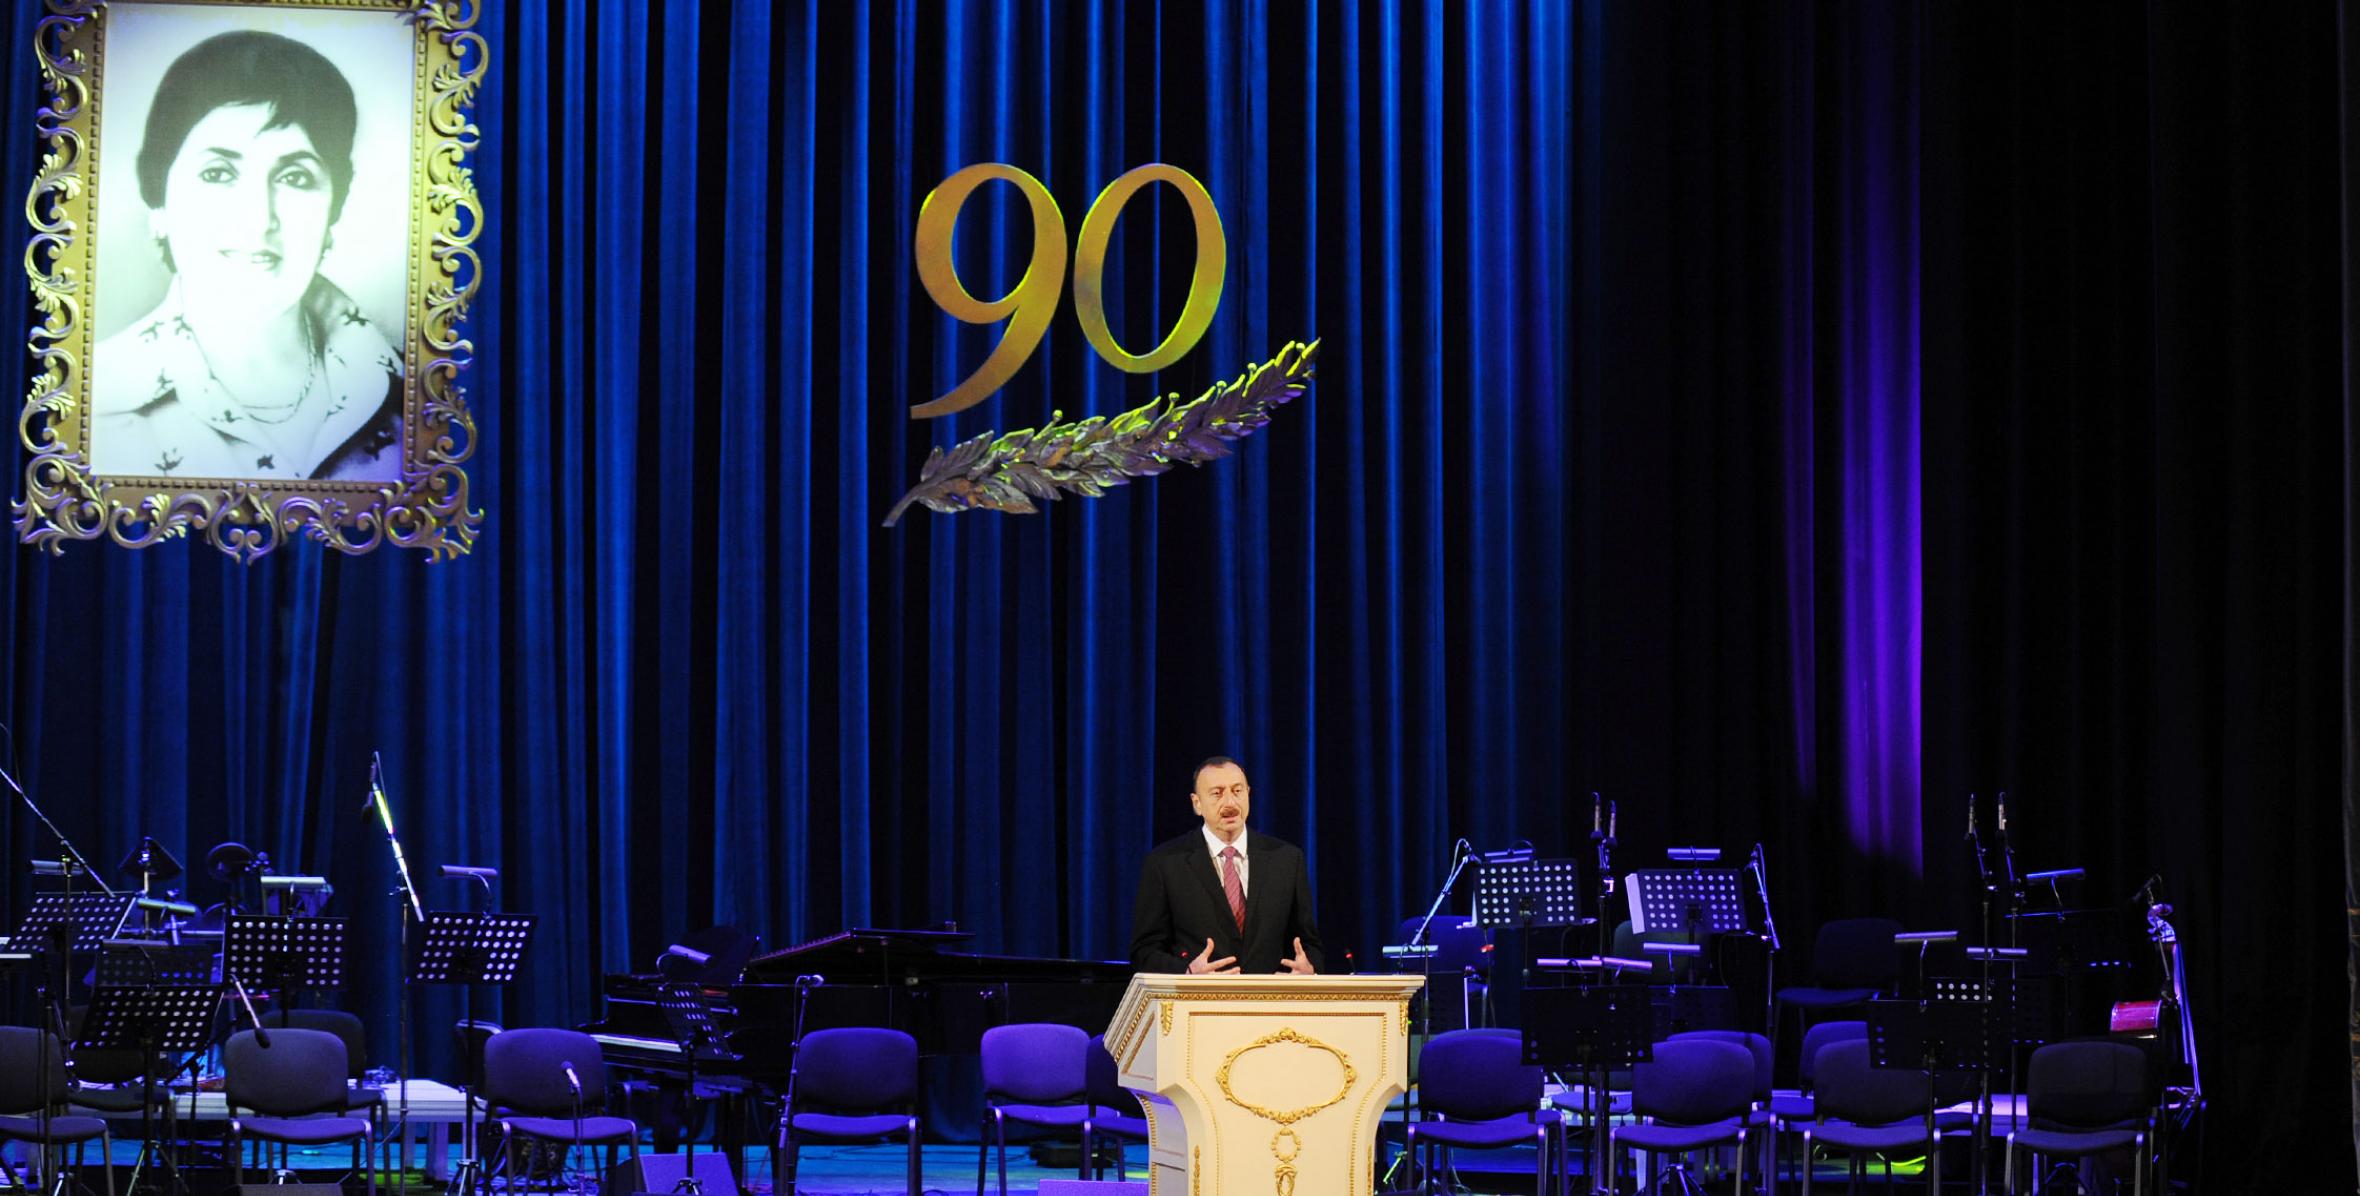 Ilham Aliyev attended a ceremony to mark the 90th birthday anniversary of Academician Zarifa Aliyeva